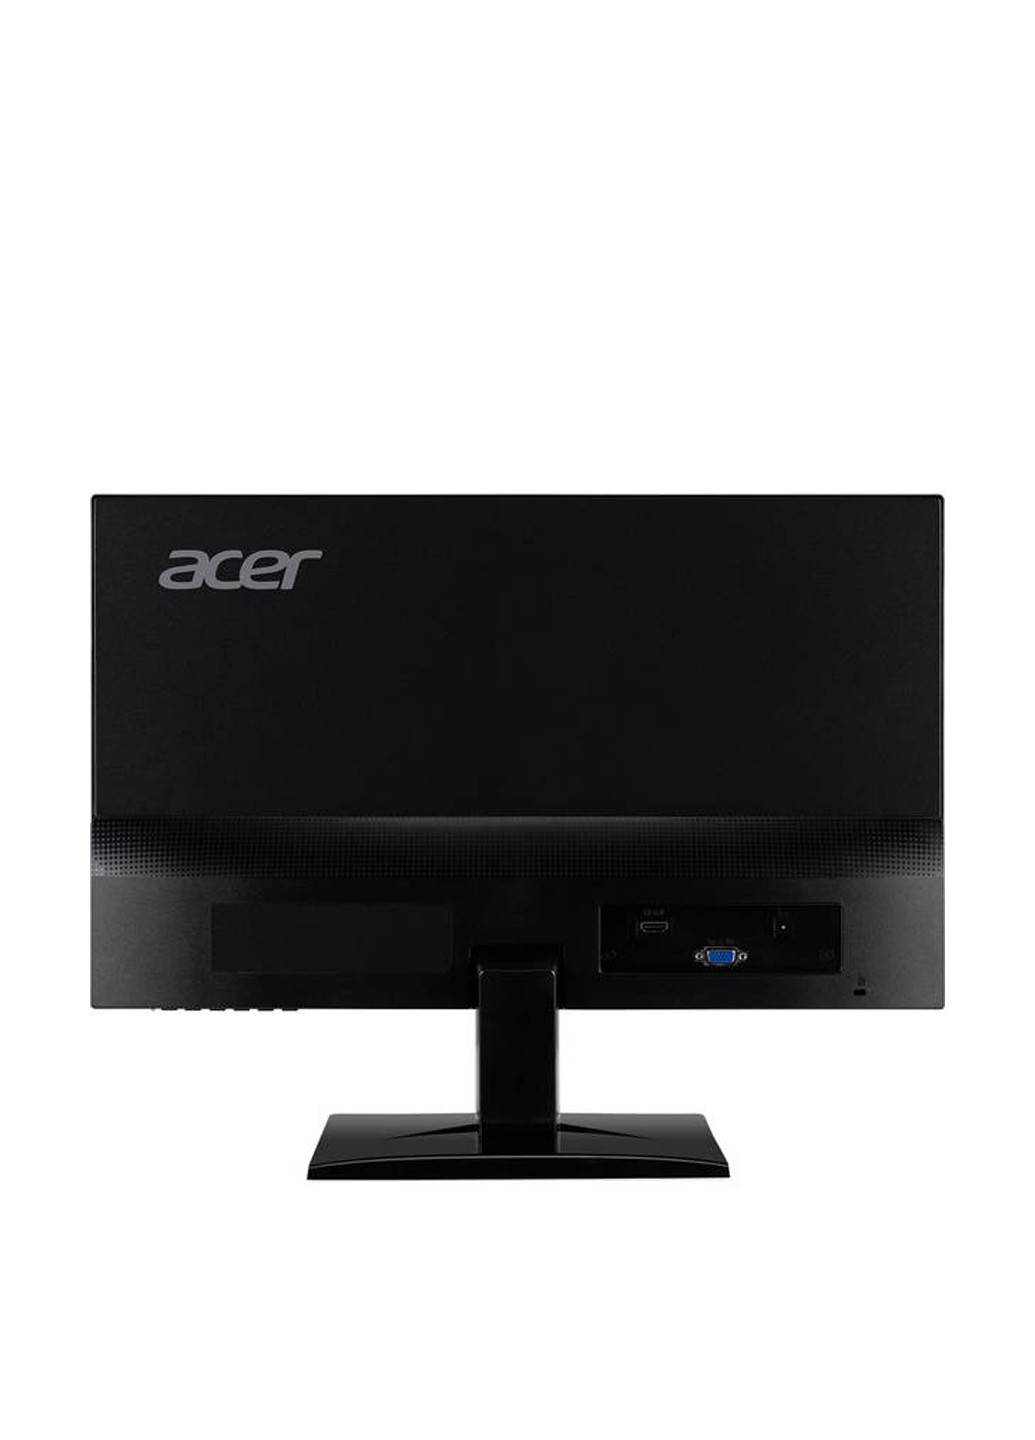 Монитор 21.5" HA220Qbid (UM.WW0EE.005) Acer монитор 21.5" acer ha220qbid (um.ww0ee.005) (130280673)